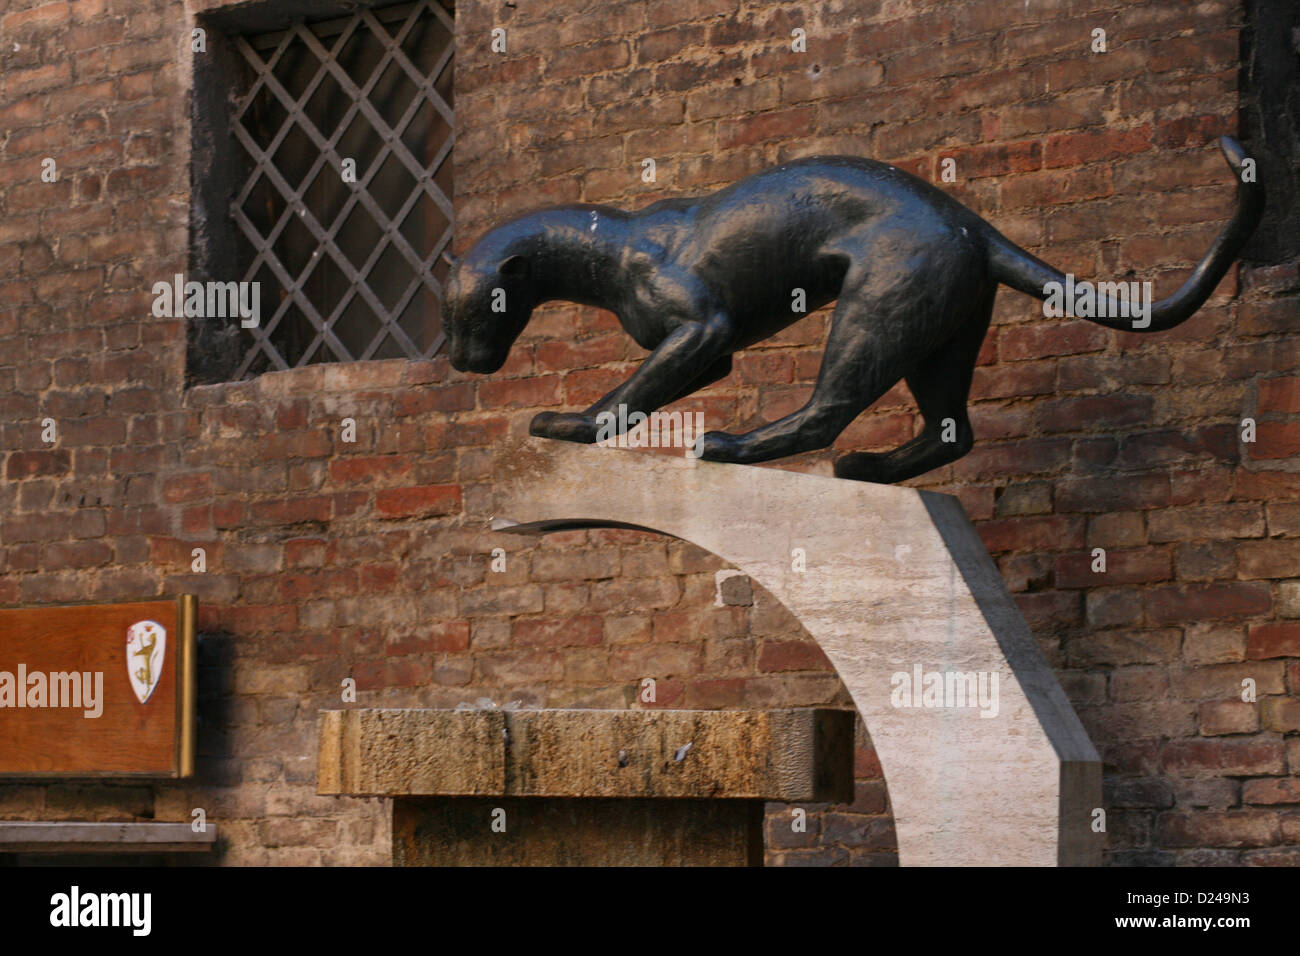 Statue of large cat like a or puma Siena - Alamy